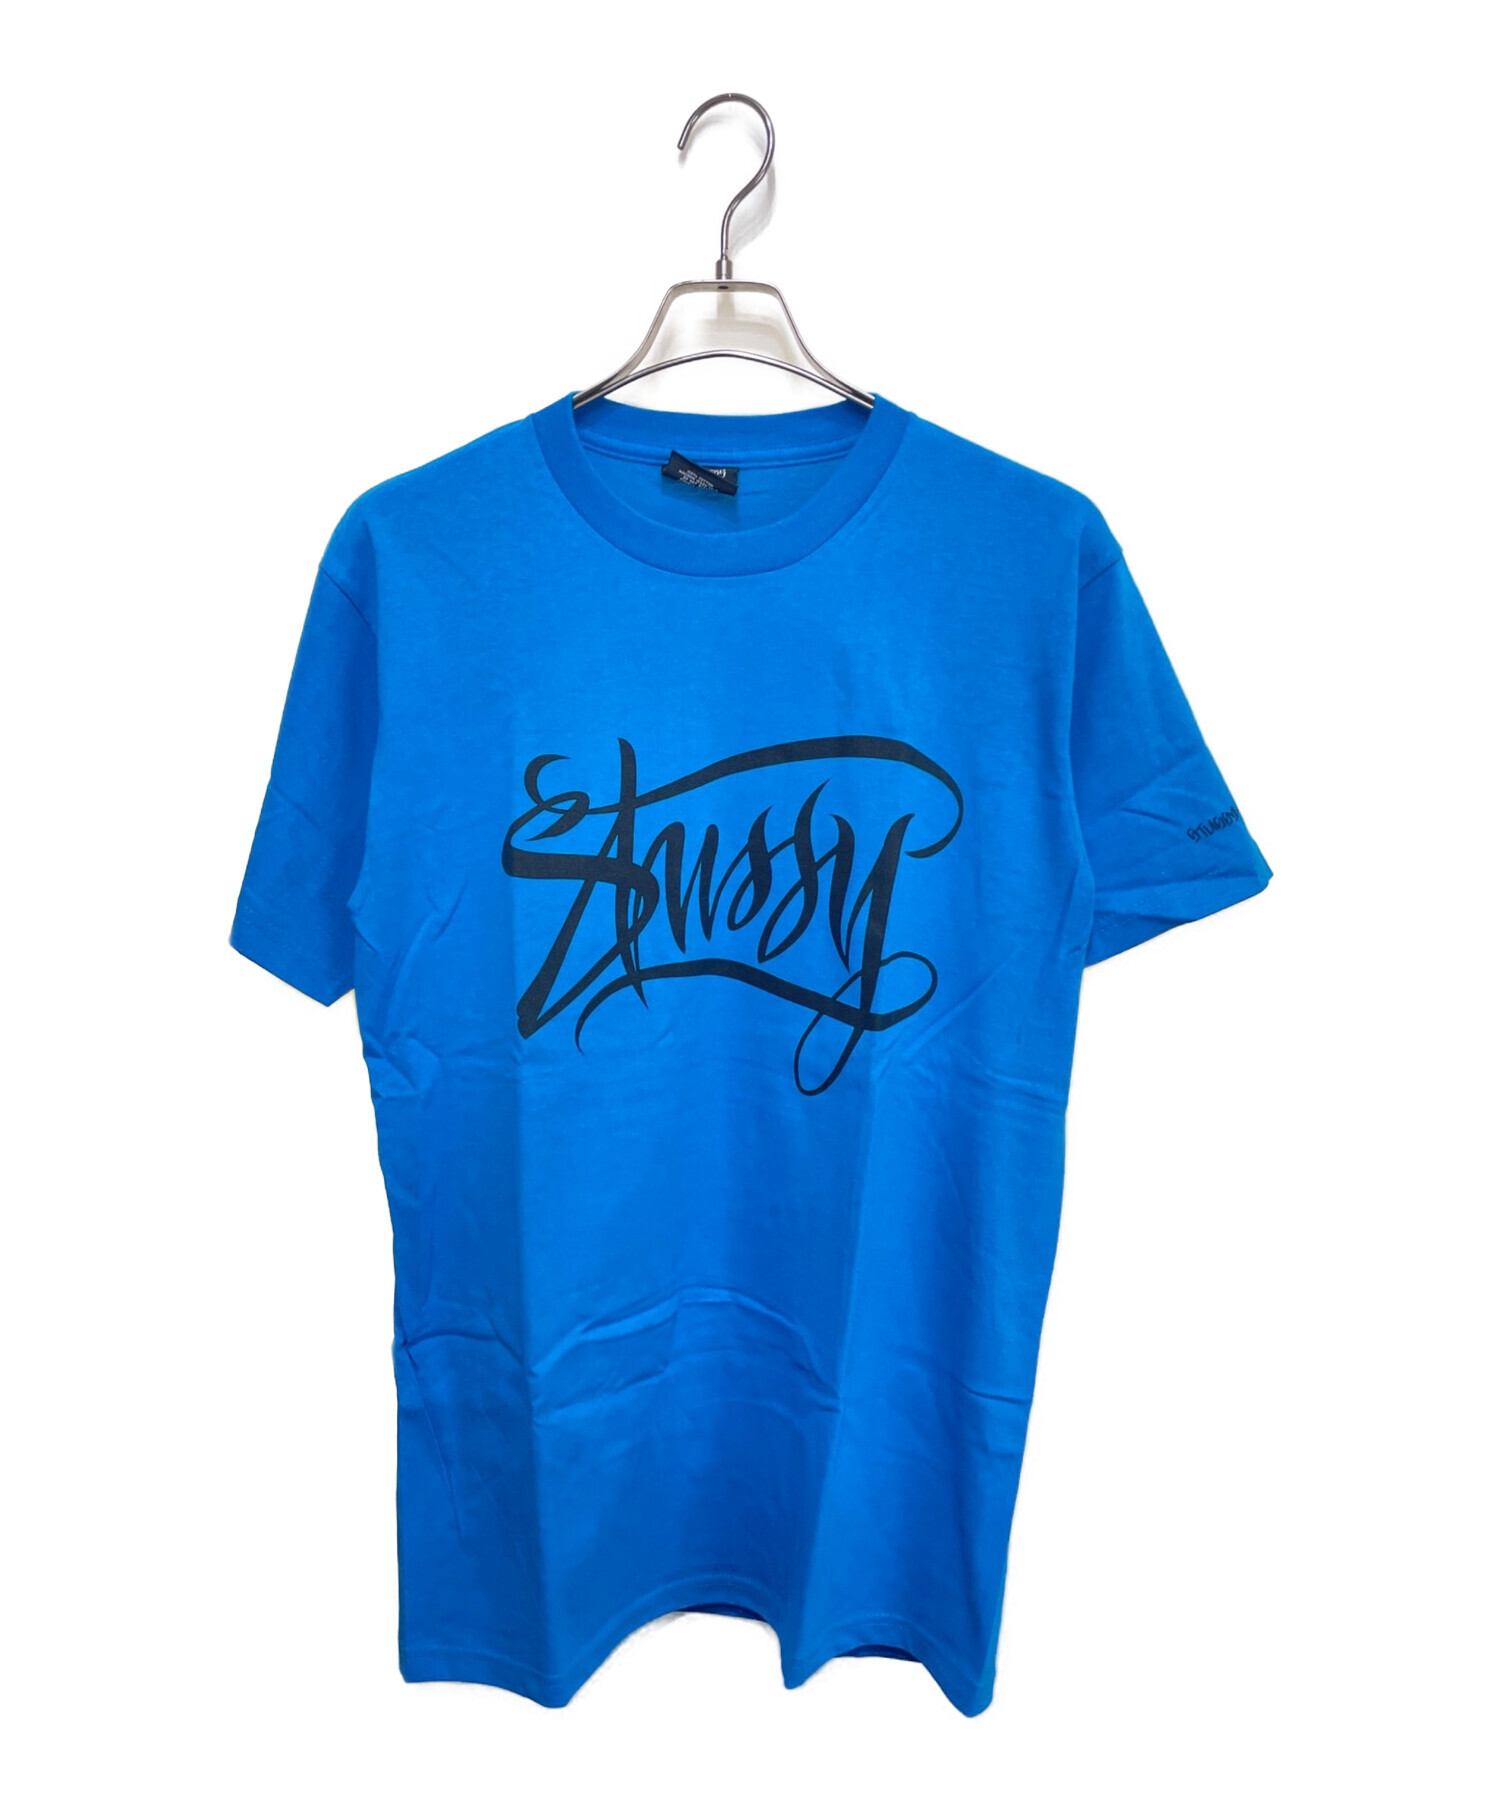 stussy (ステューシー) NEIGHBORHOOD (ネイバーフッド) Tシャツ ブルー サイズ:M